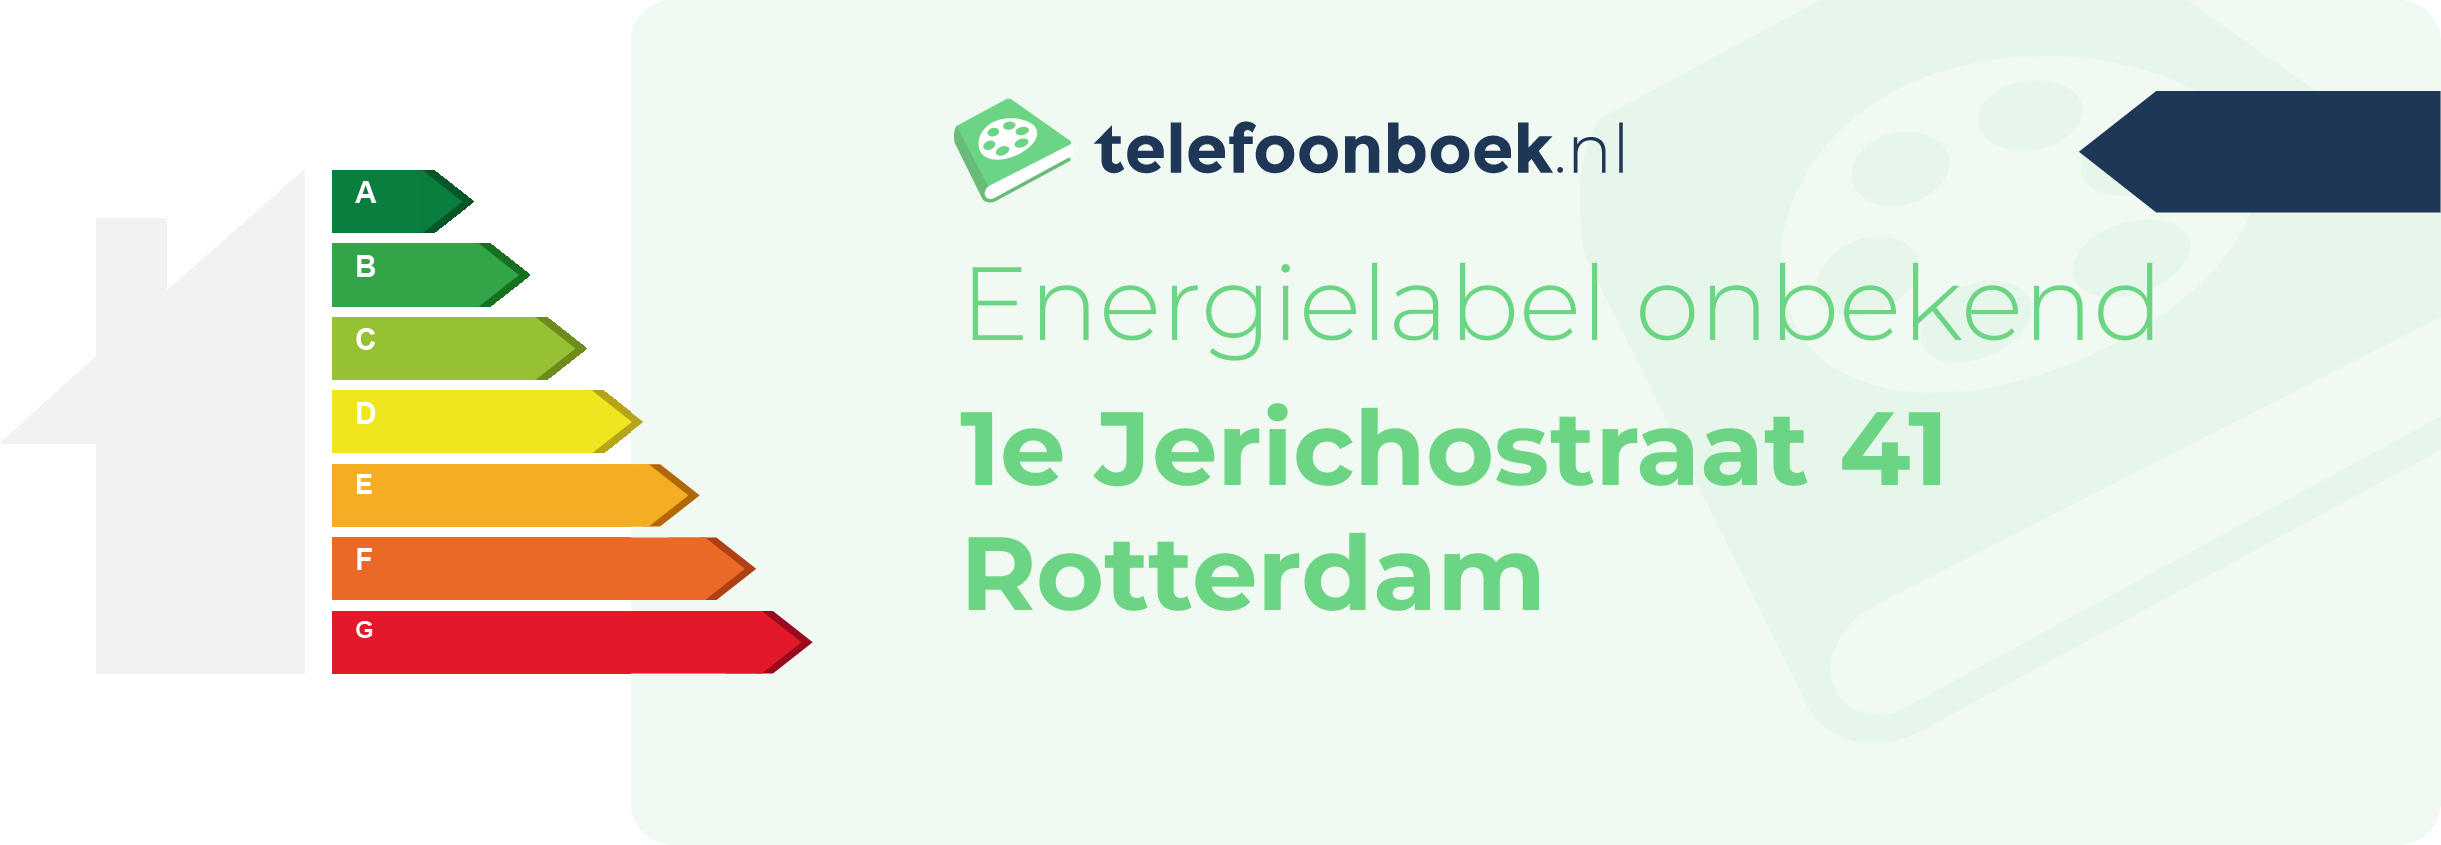 Energielabel 1e Jerichostraat 41 Rotterdam